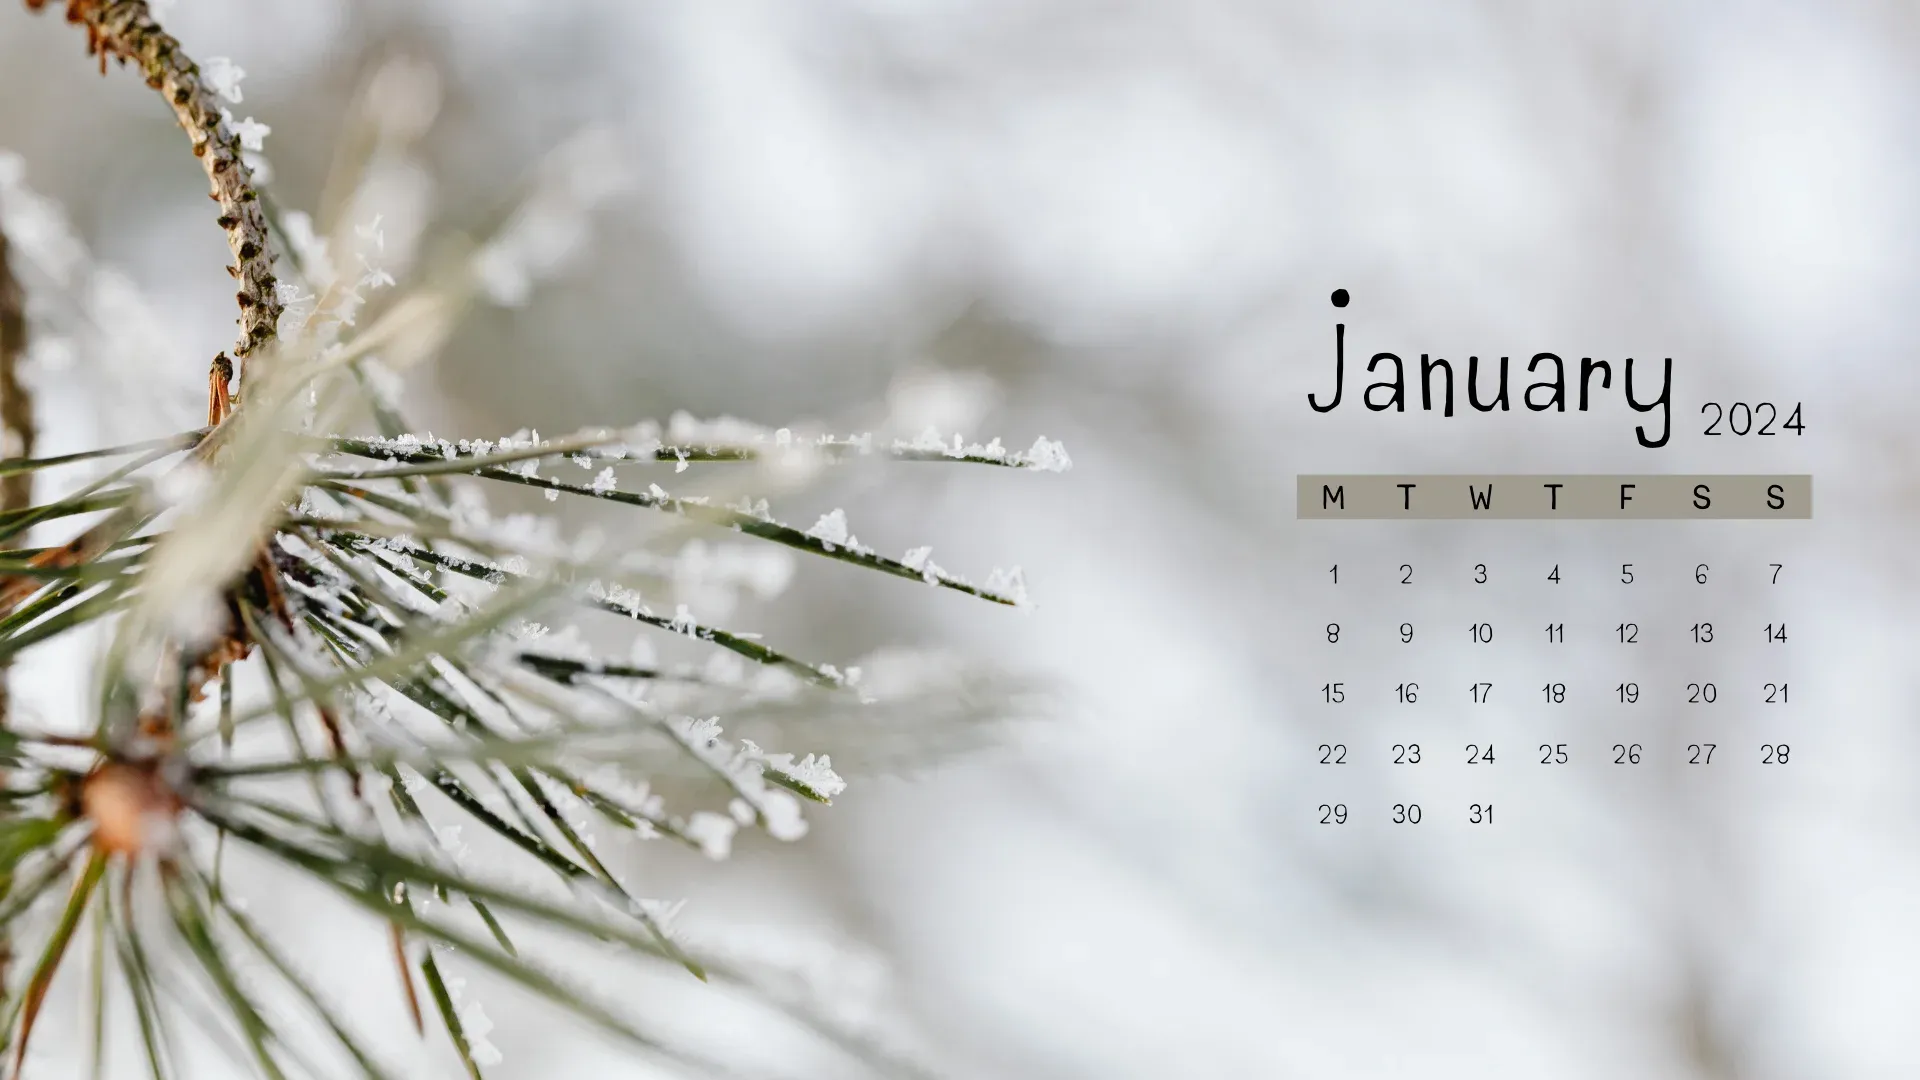 January 2024 Winter Theme Calendar Wallpaper